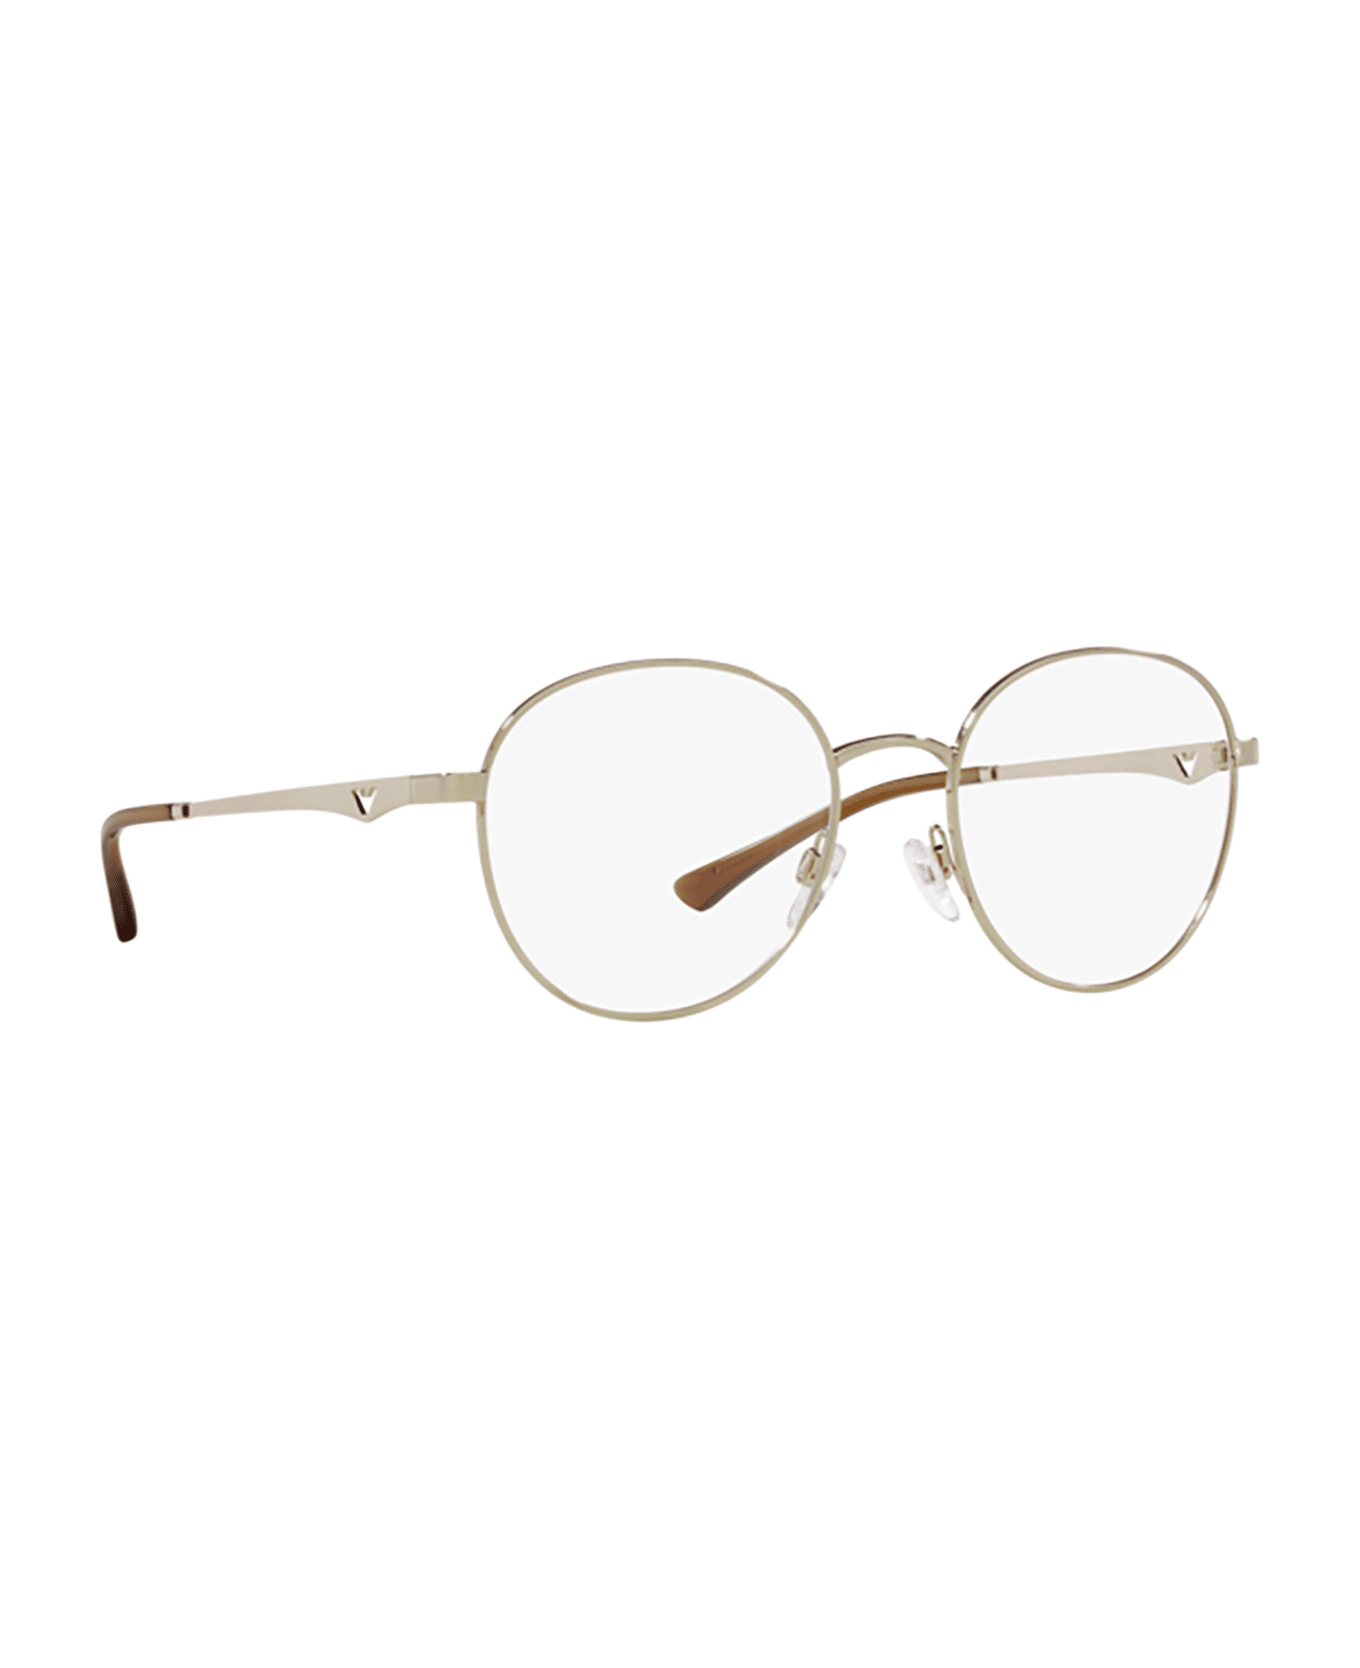 Emporio Armani Ea1144 Shiny Pale Gold Glasses - Shiny Pale Gold